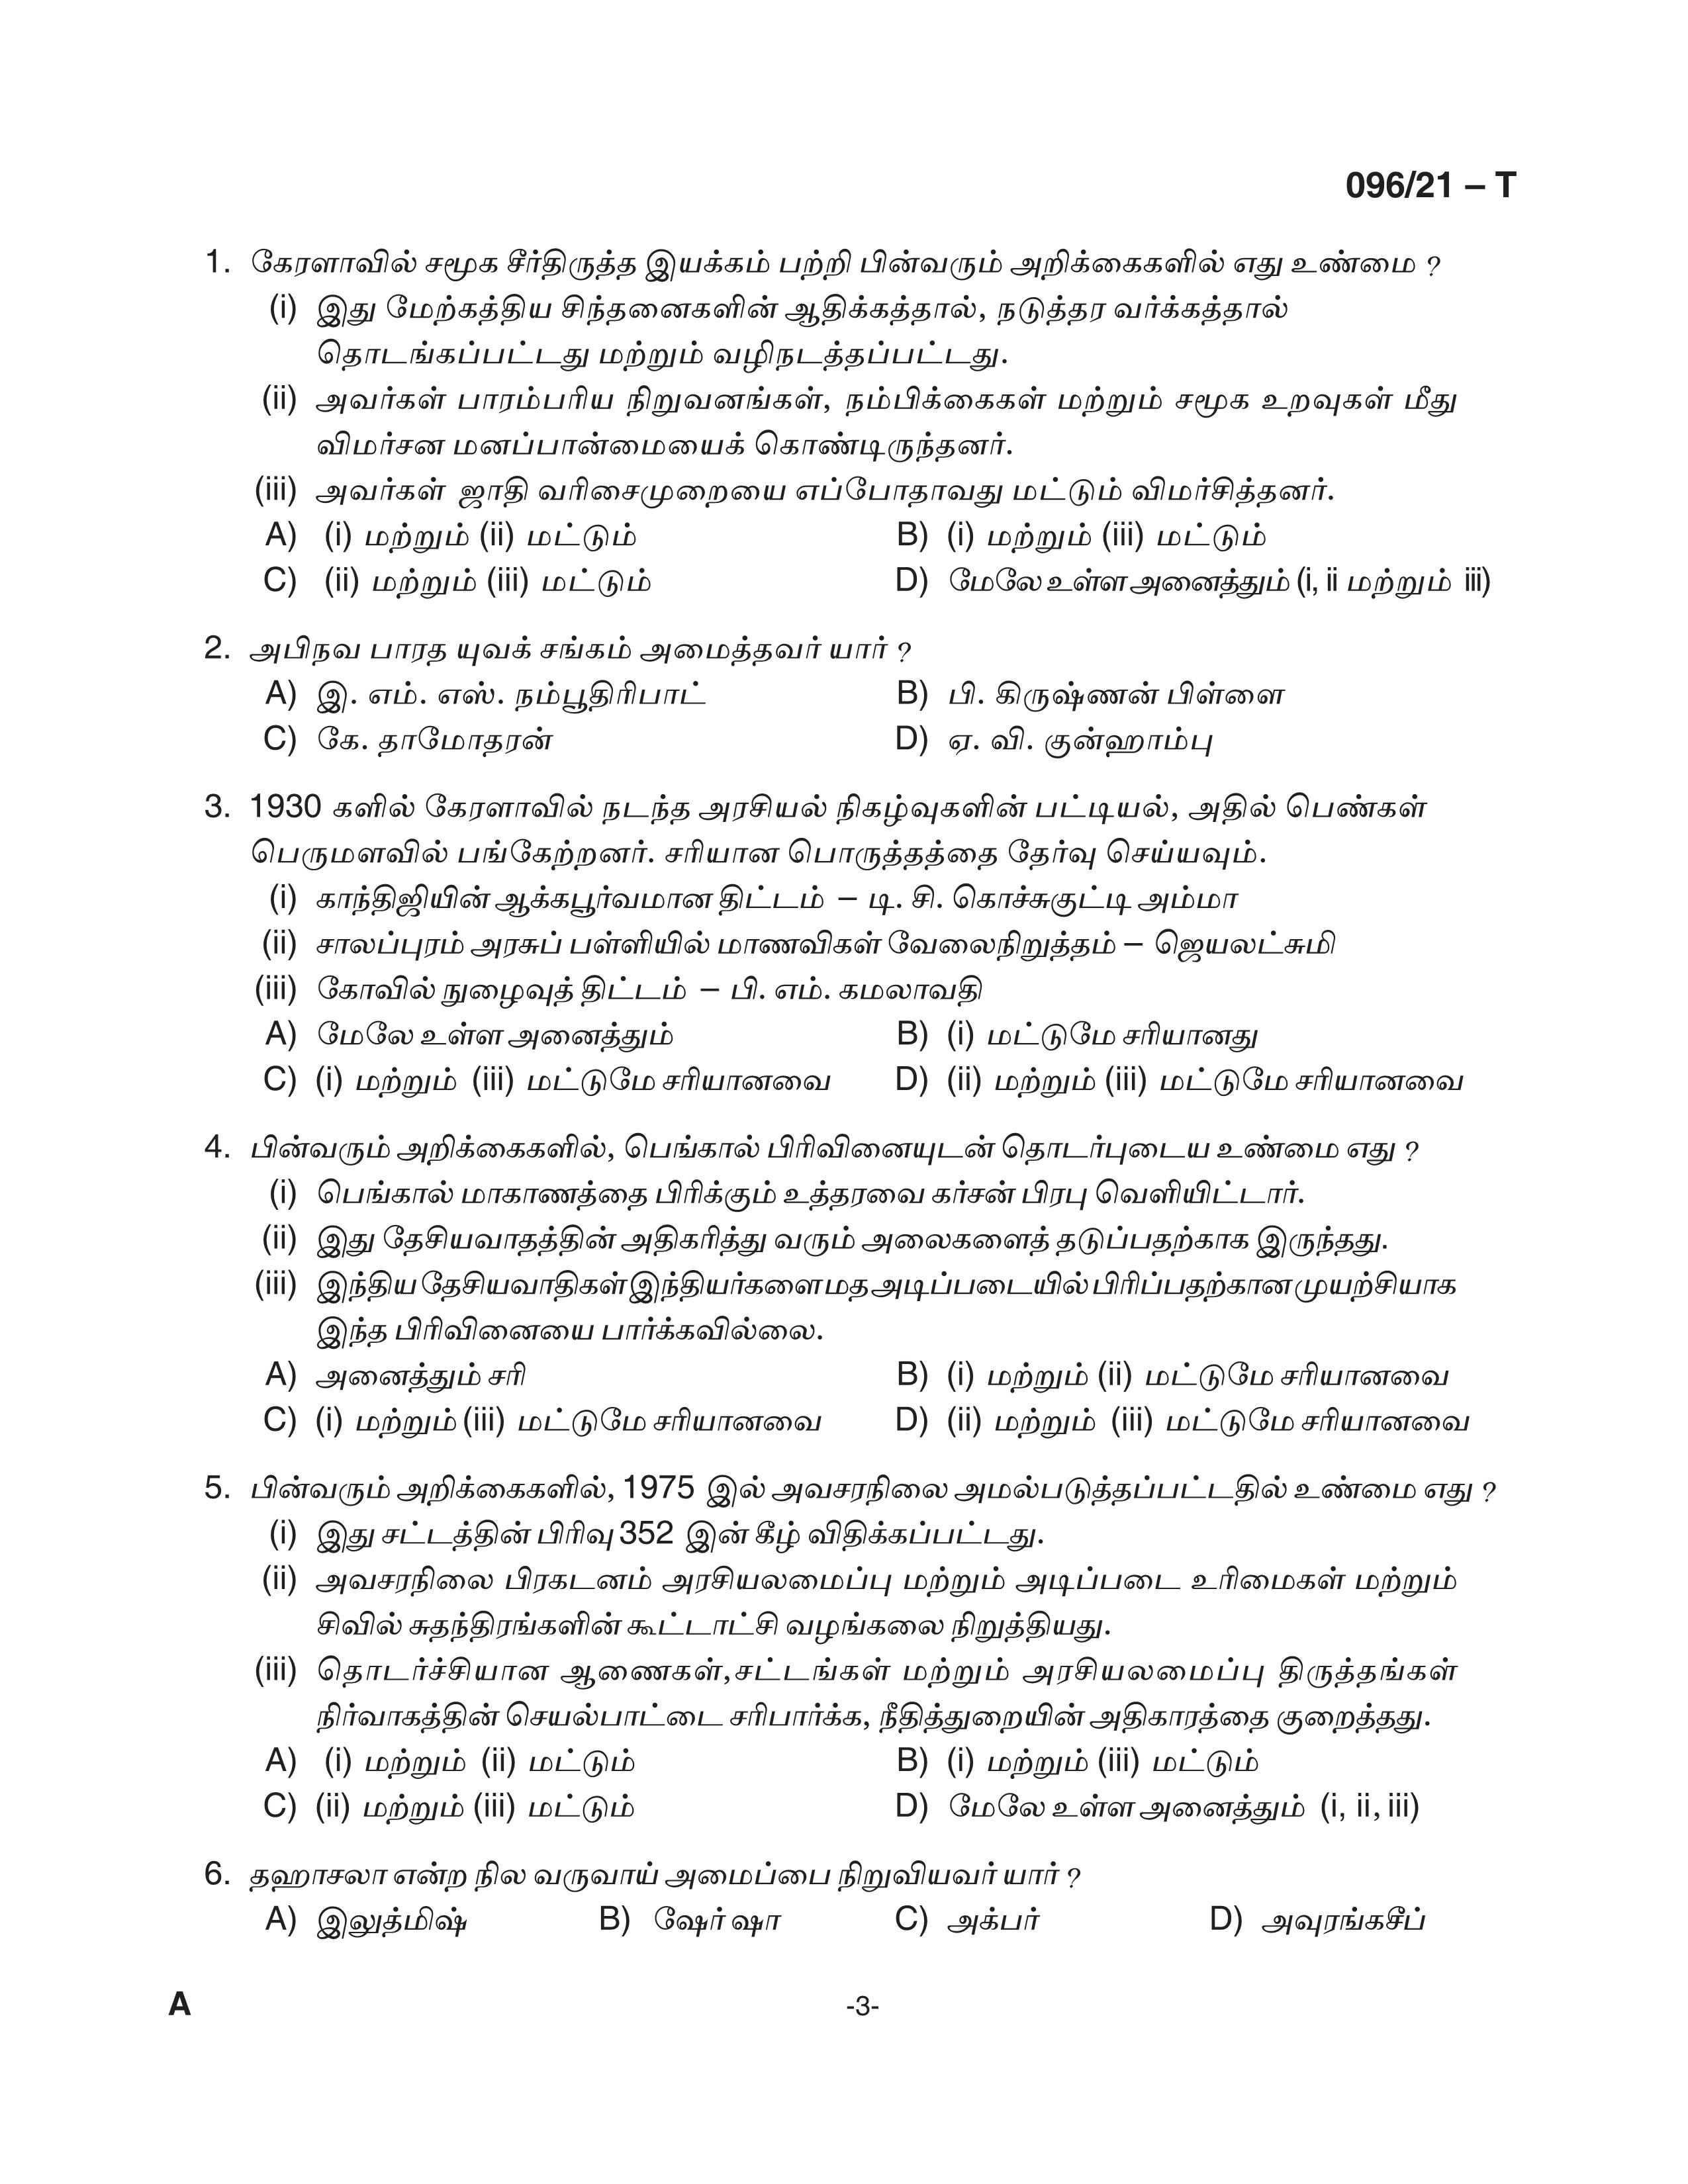 KPSC Degree Level Preliminary Exam Stage II Tamil Exam 2021 Code 09621 T 3